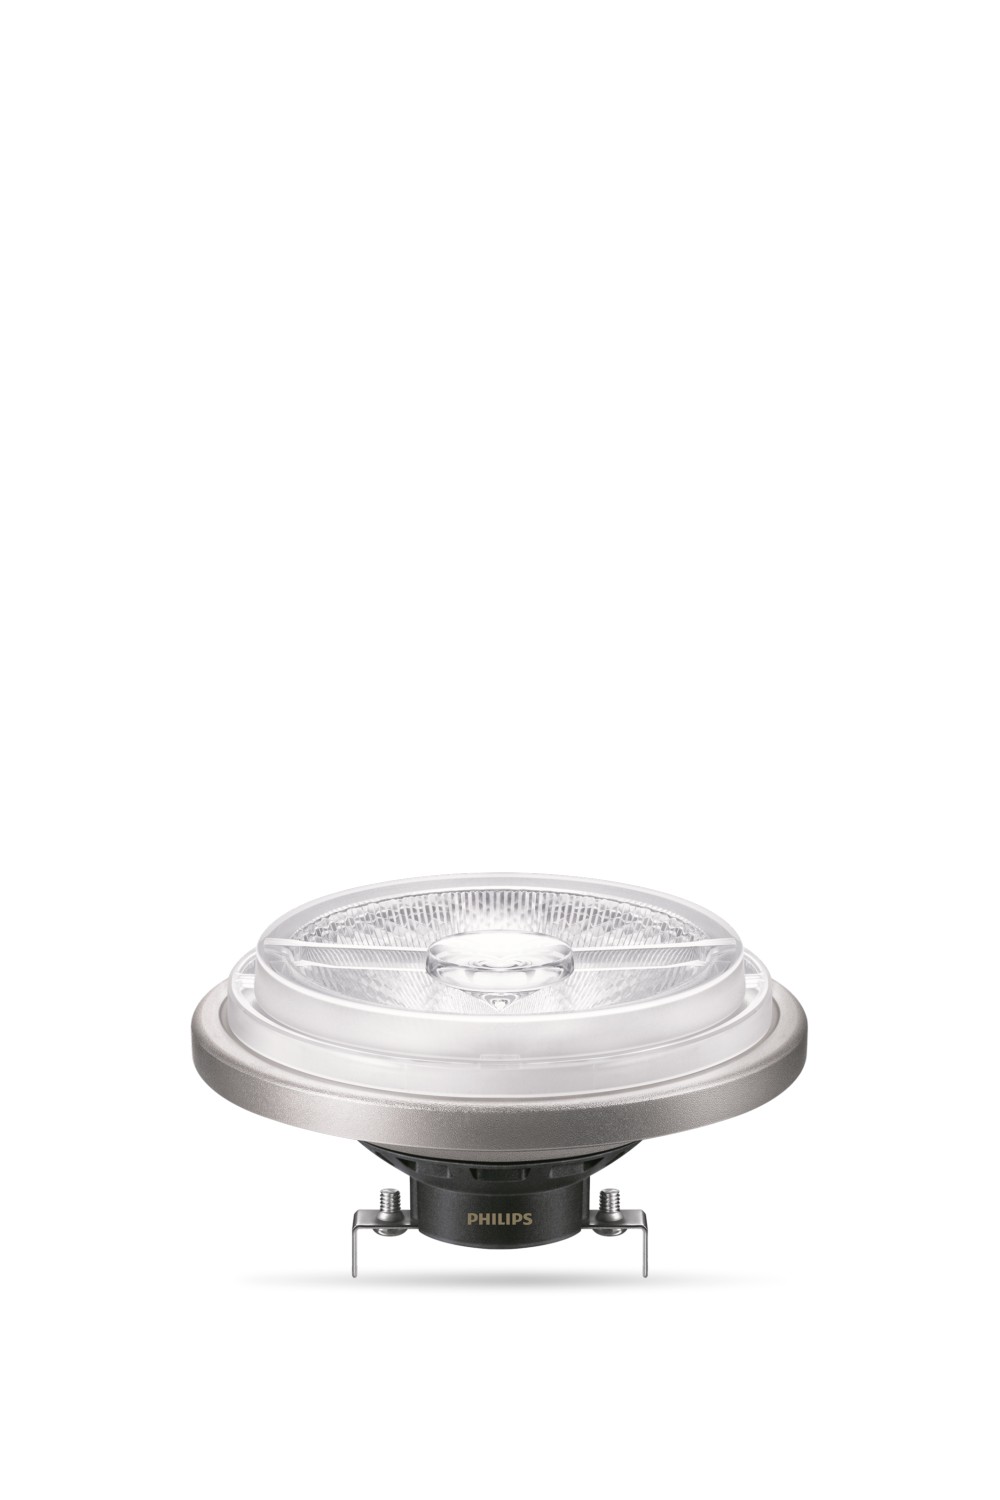 Philips LED Reflektorlampe AR111 ExpertColor 20 Watt 930 24 Grad